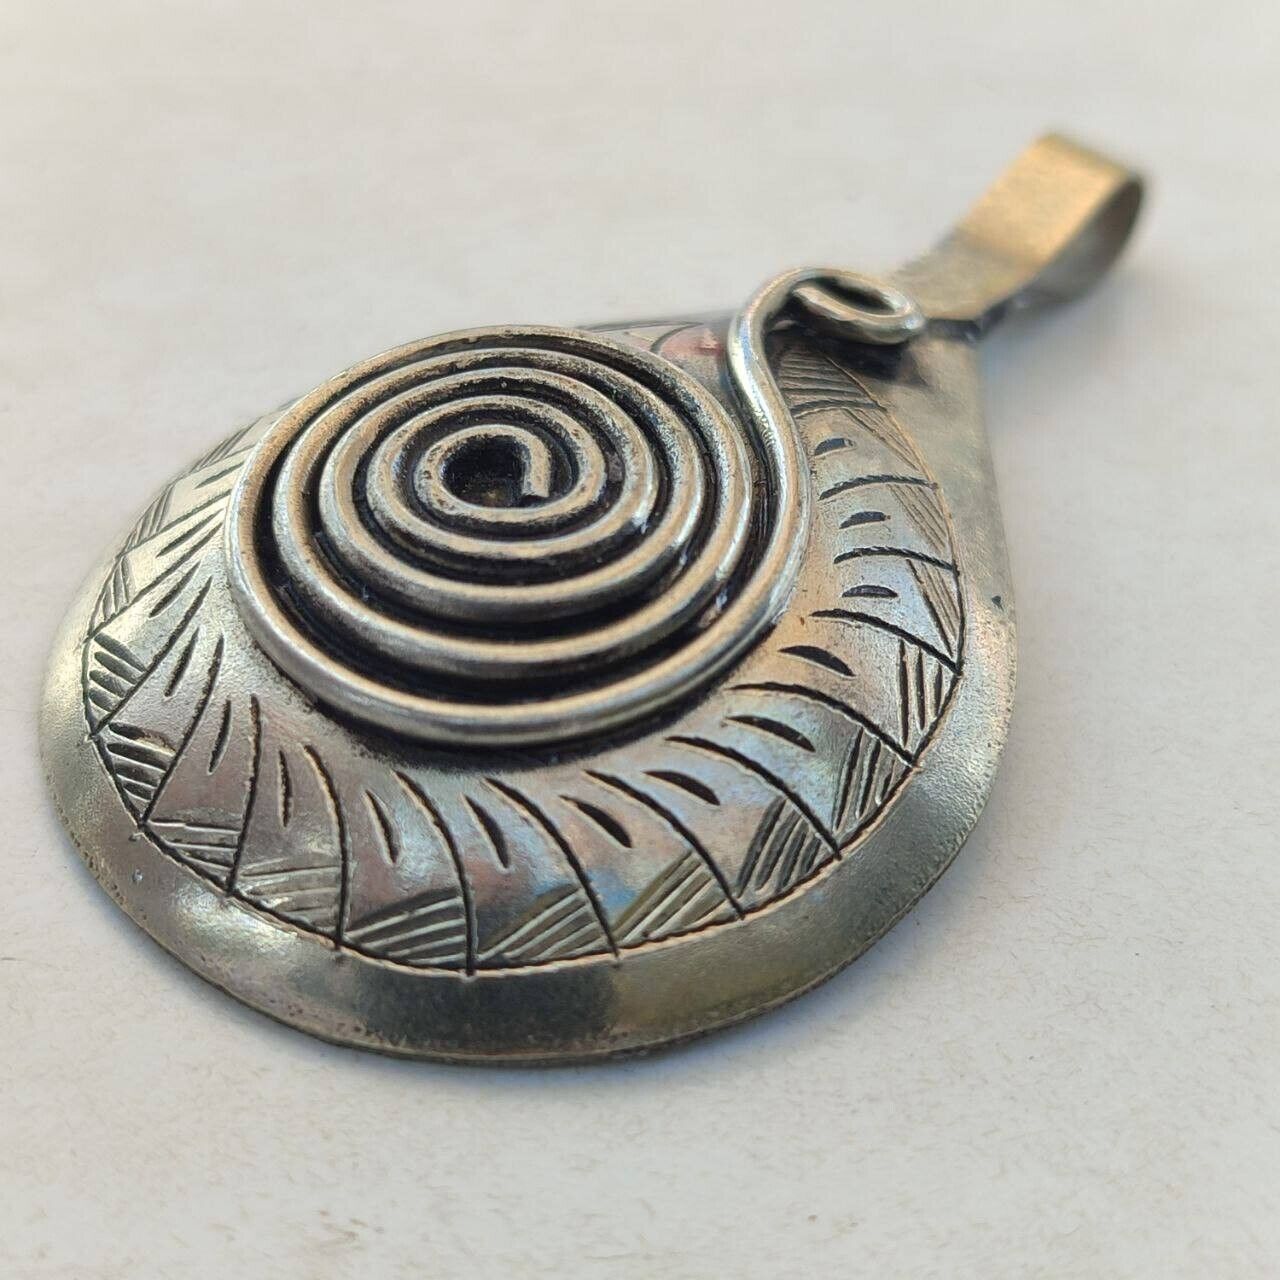 Rare Viking Artifact Pendant - Genuine Ancient Silver Amulet, Collector's Item